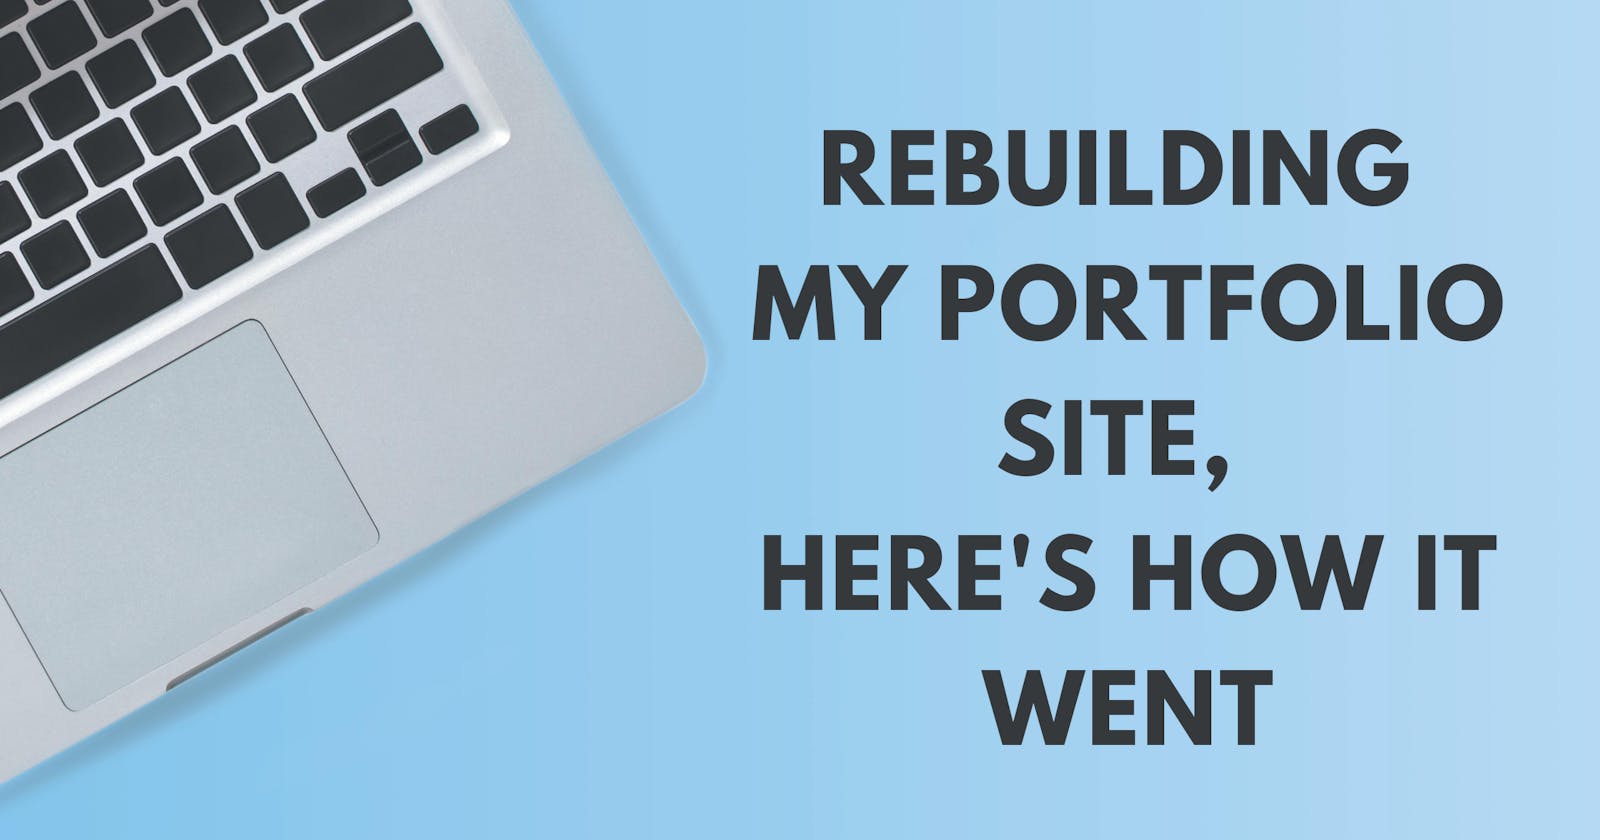 Rebuilding the my portfolio site, here's how it went